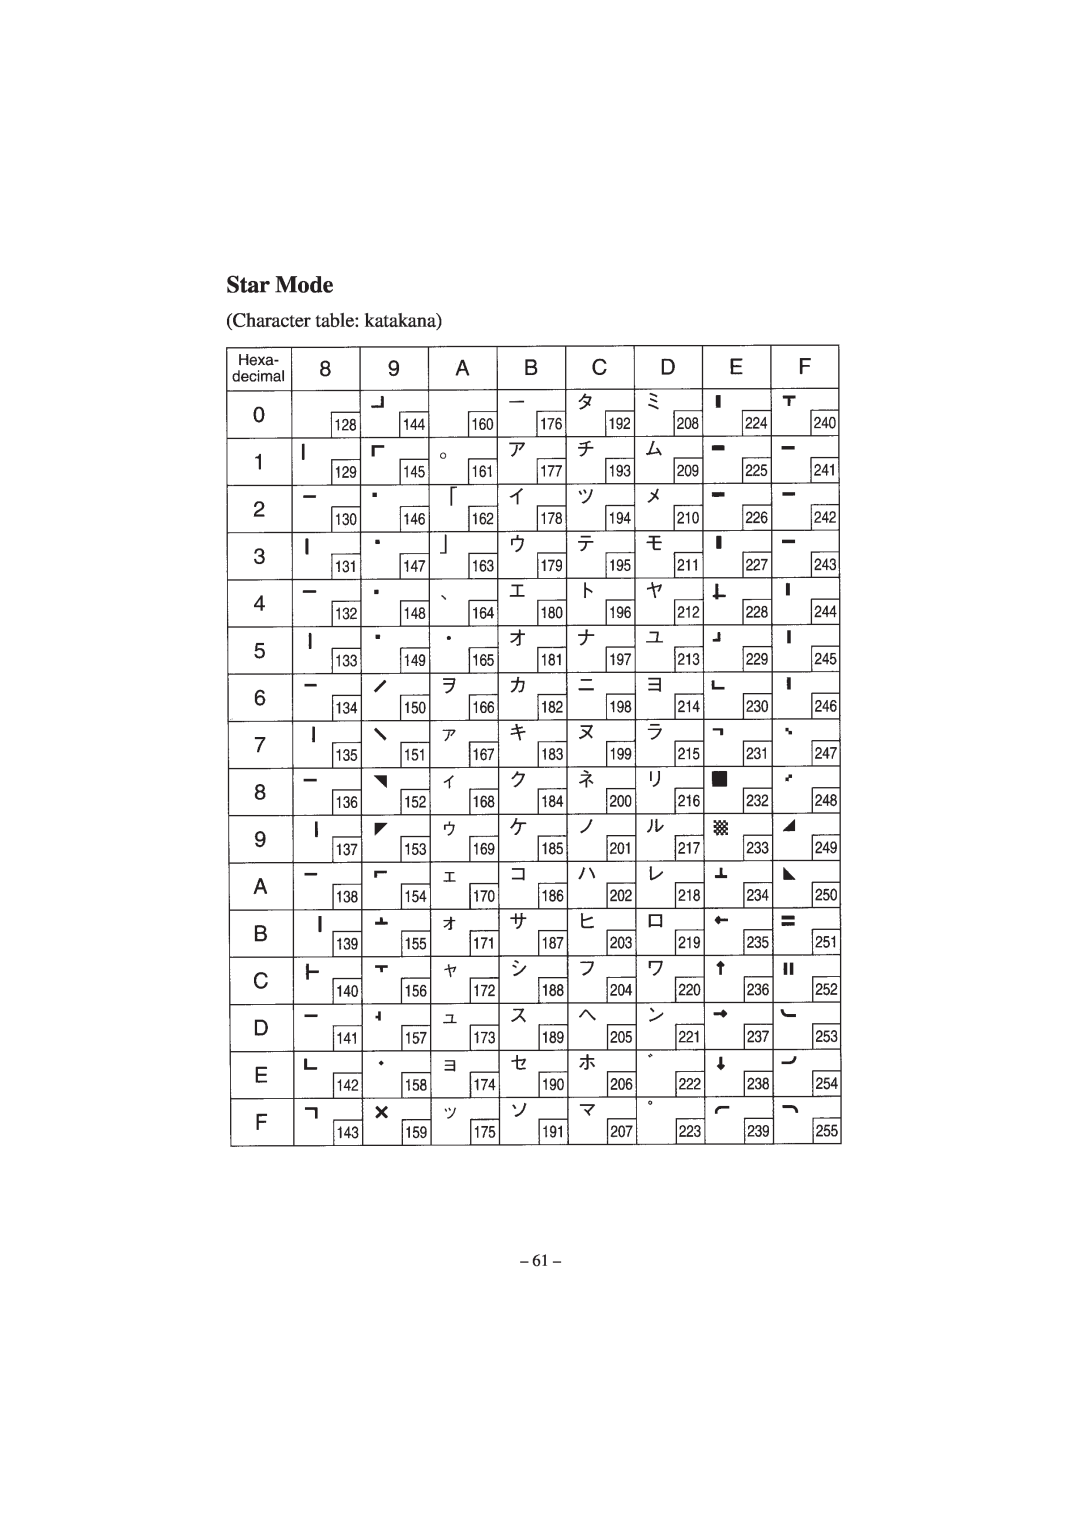 Star Micronics RS232 manual Star Mode, Character table katakana 